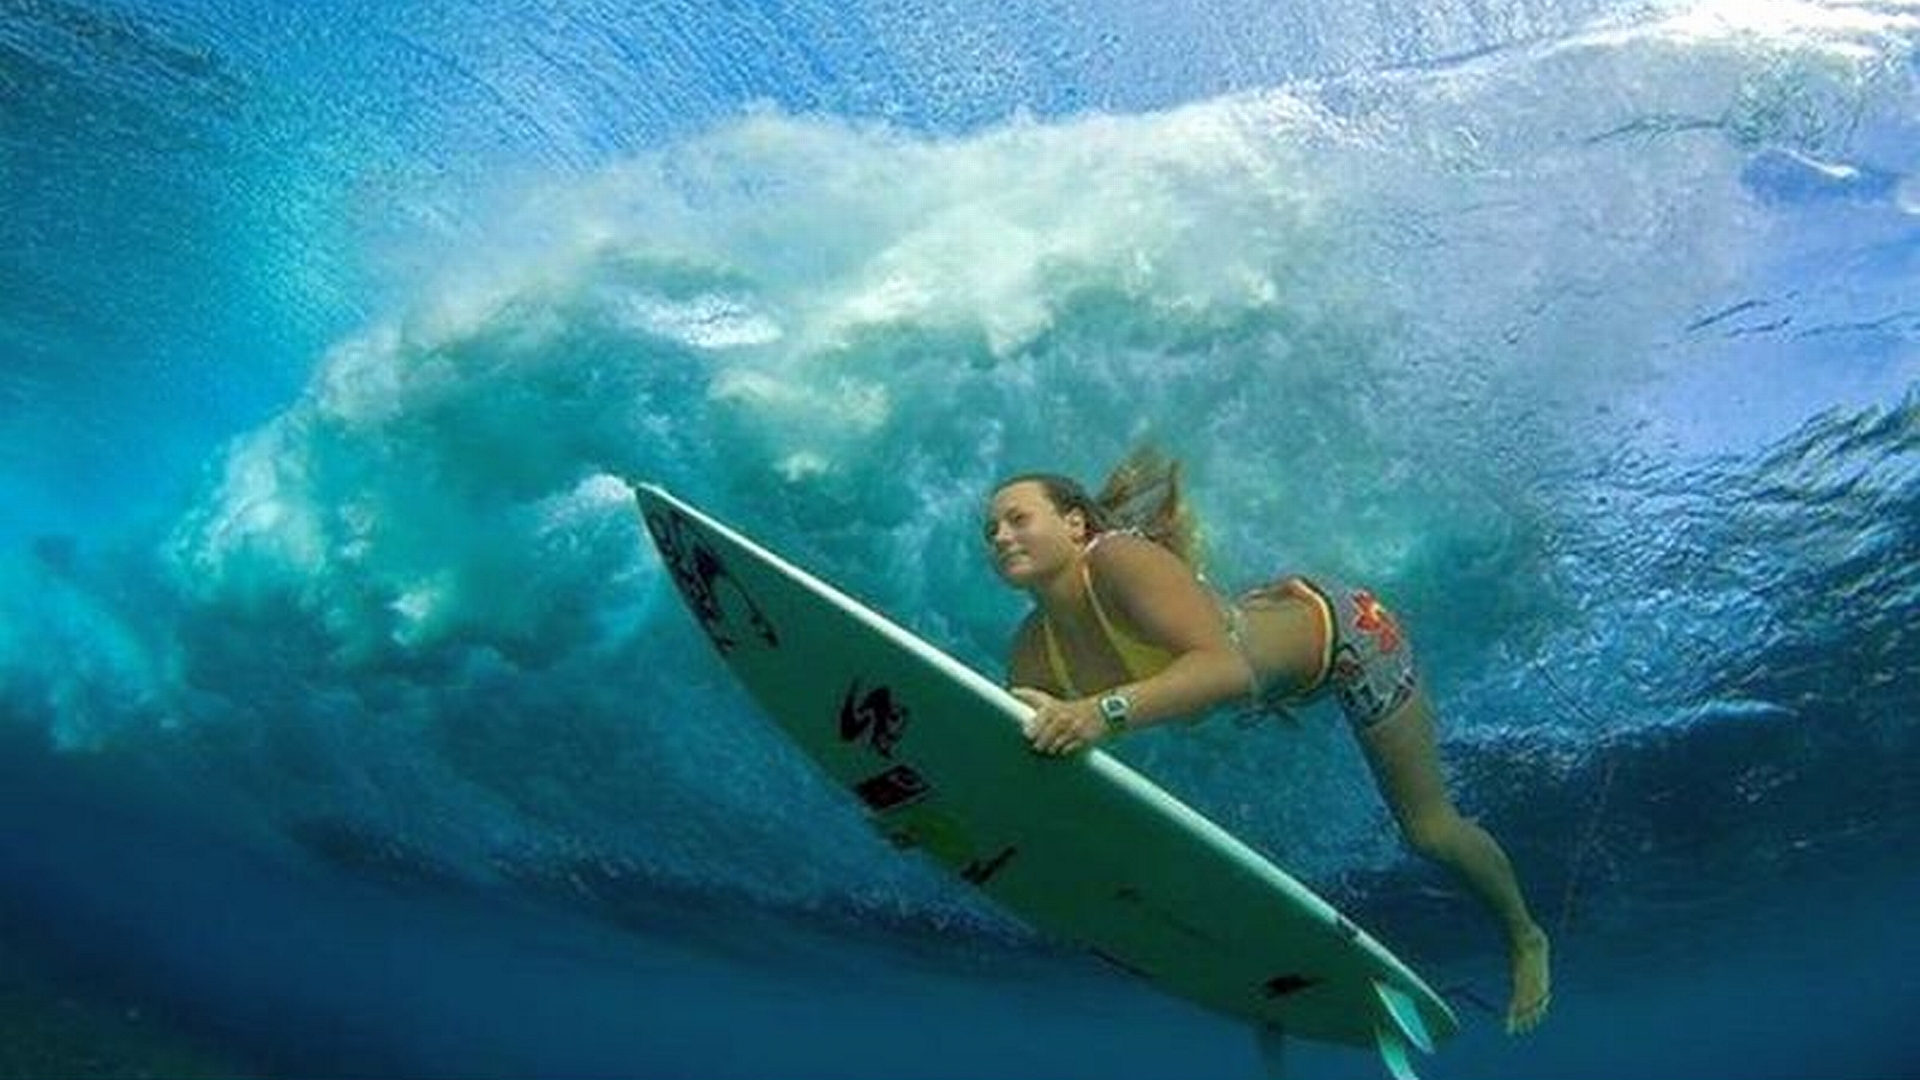 Surfer carving a wave in a vibrant ocean - desktop wallpaper.